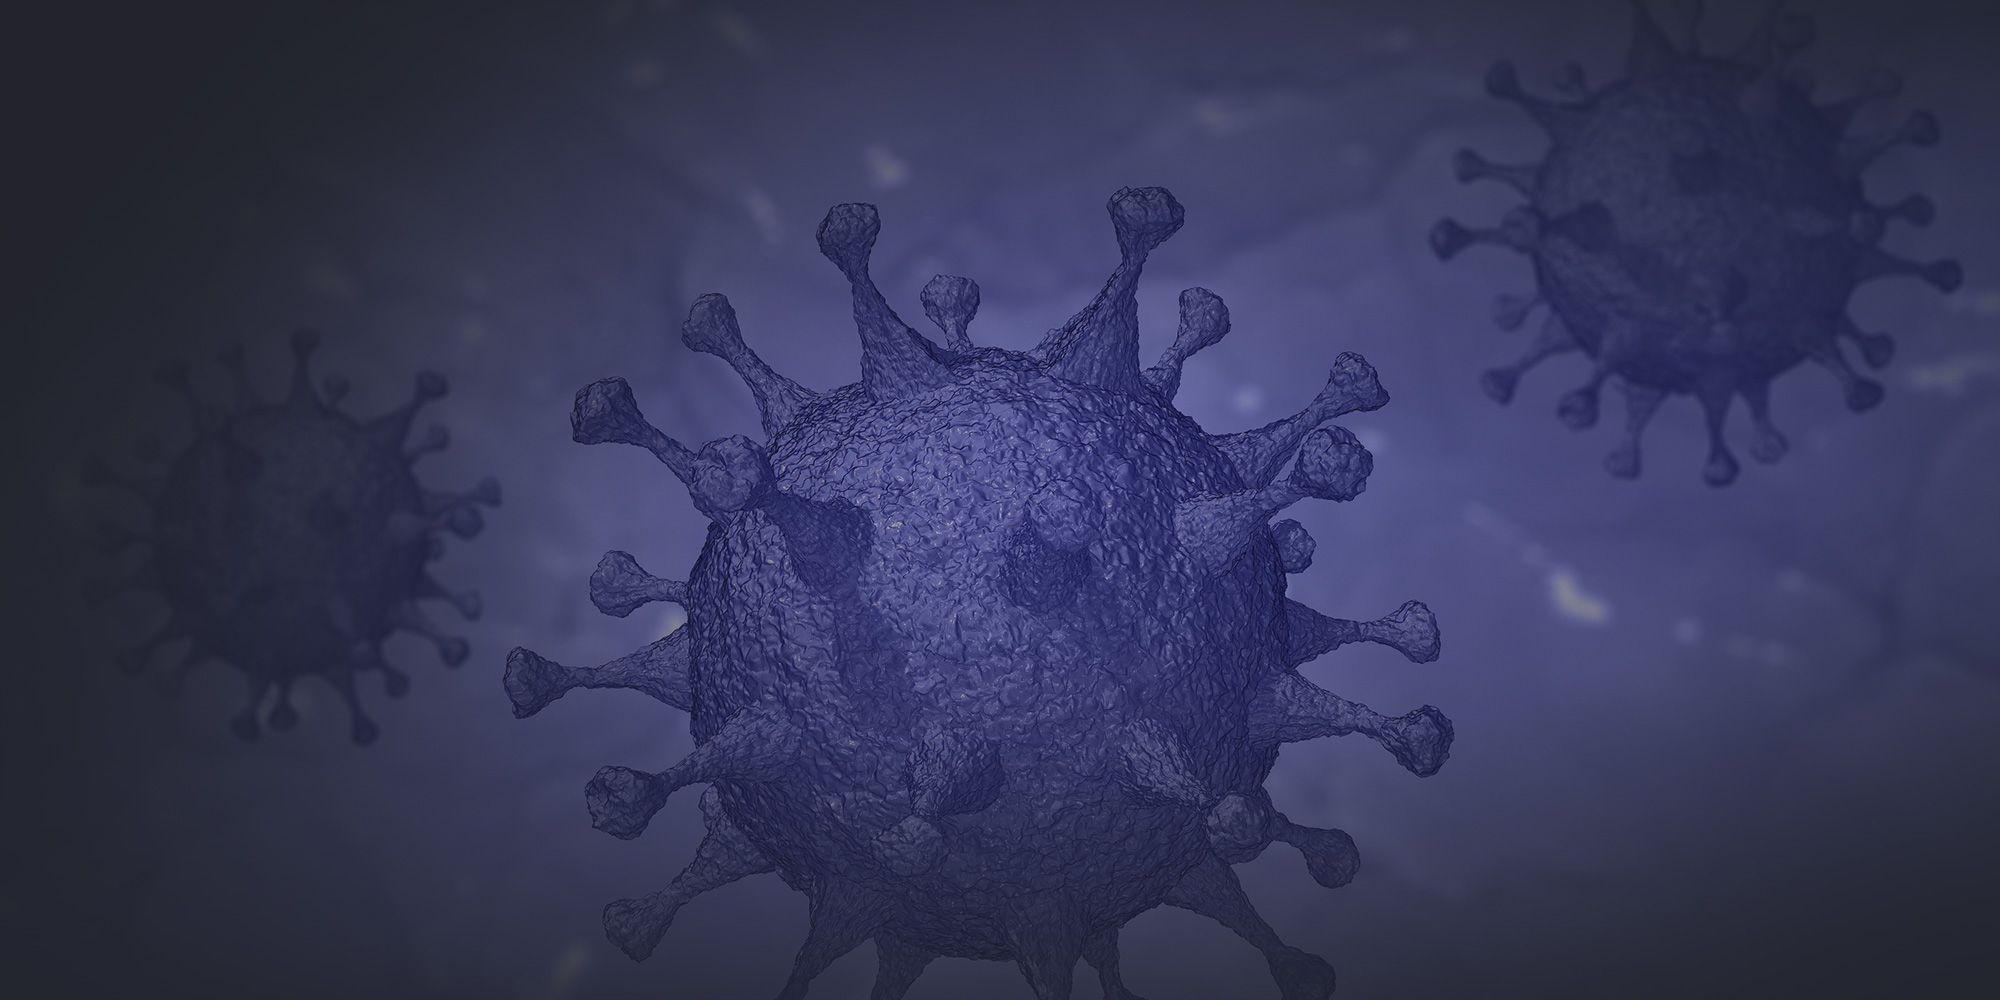 SARS-CoV-2 virus, which causes COVID-19